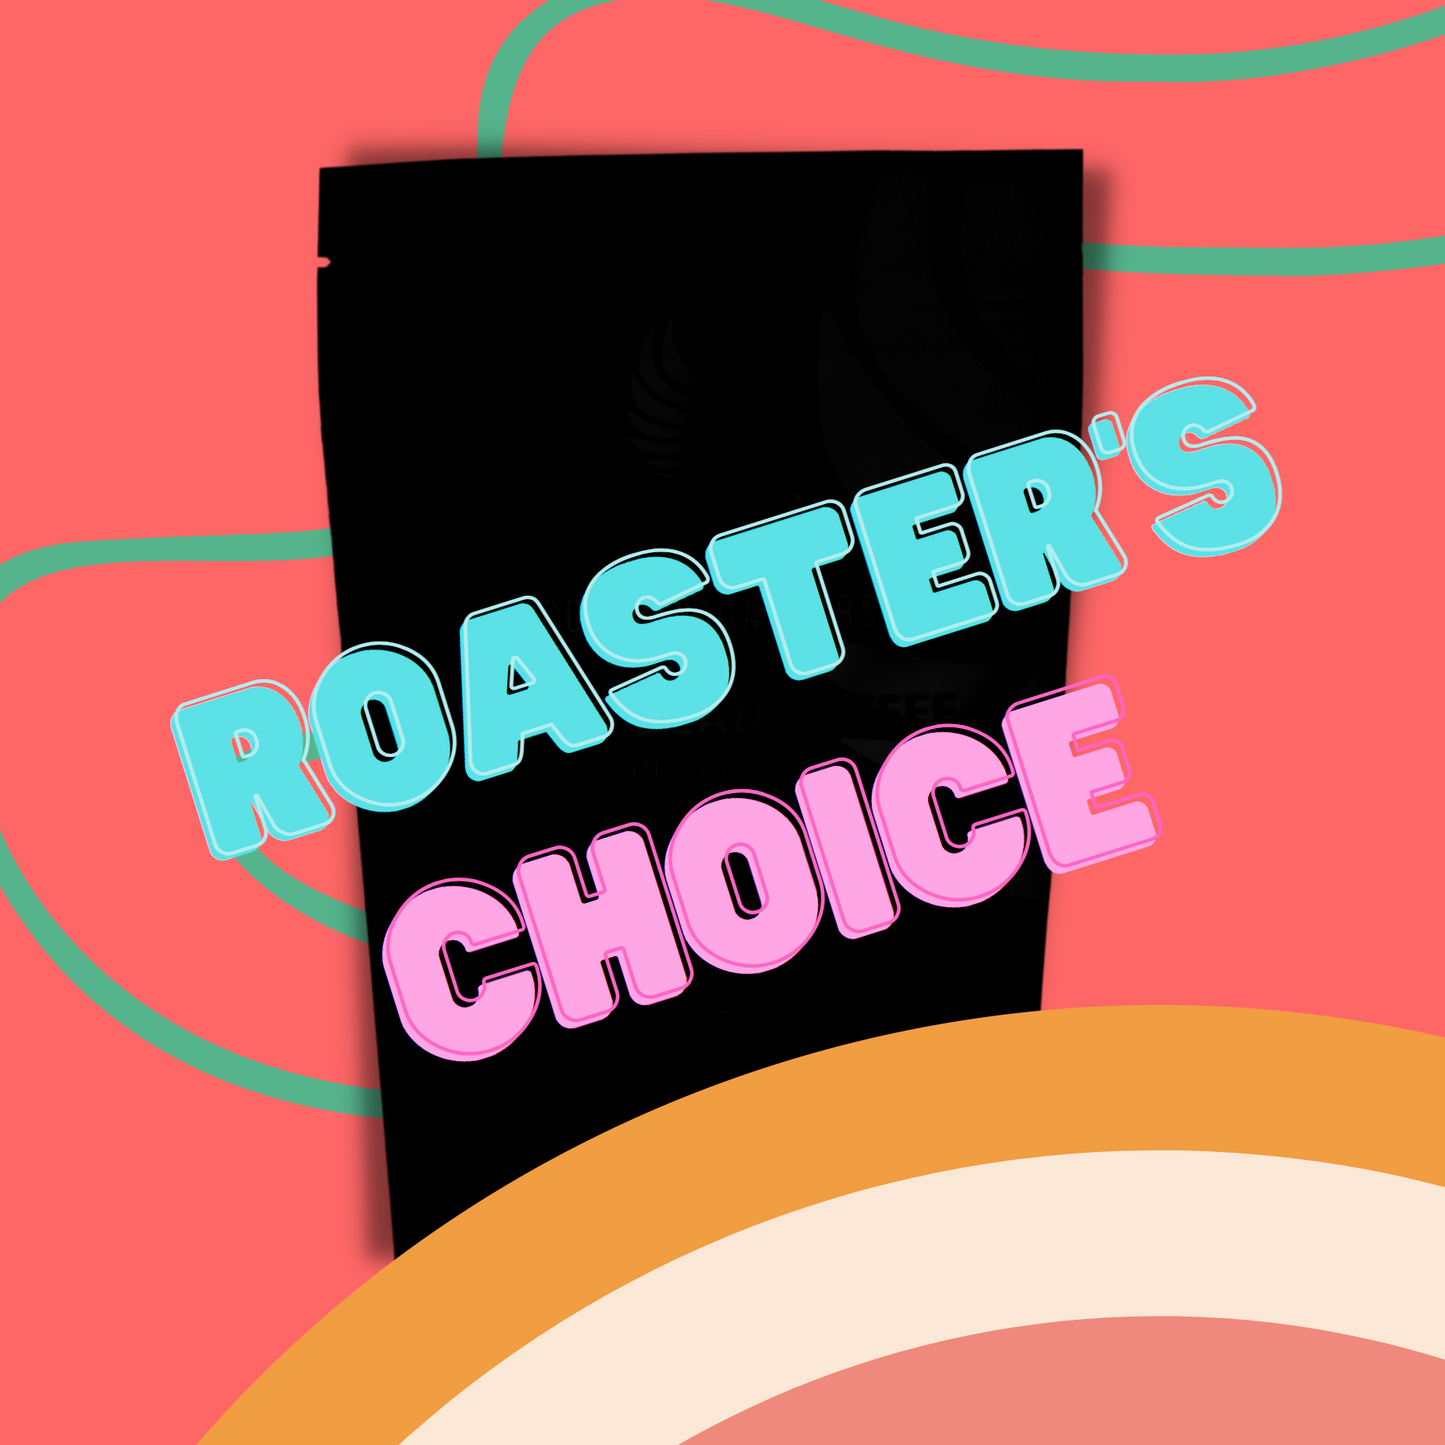 Roasters Choice